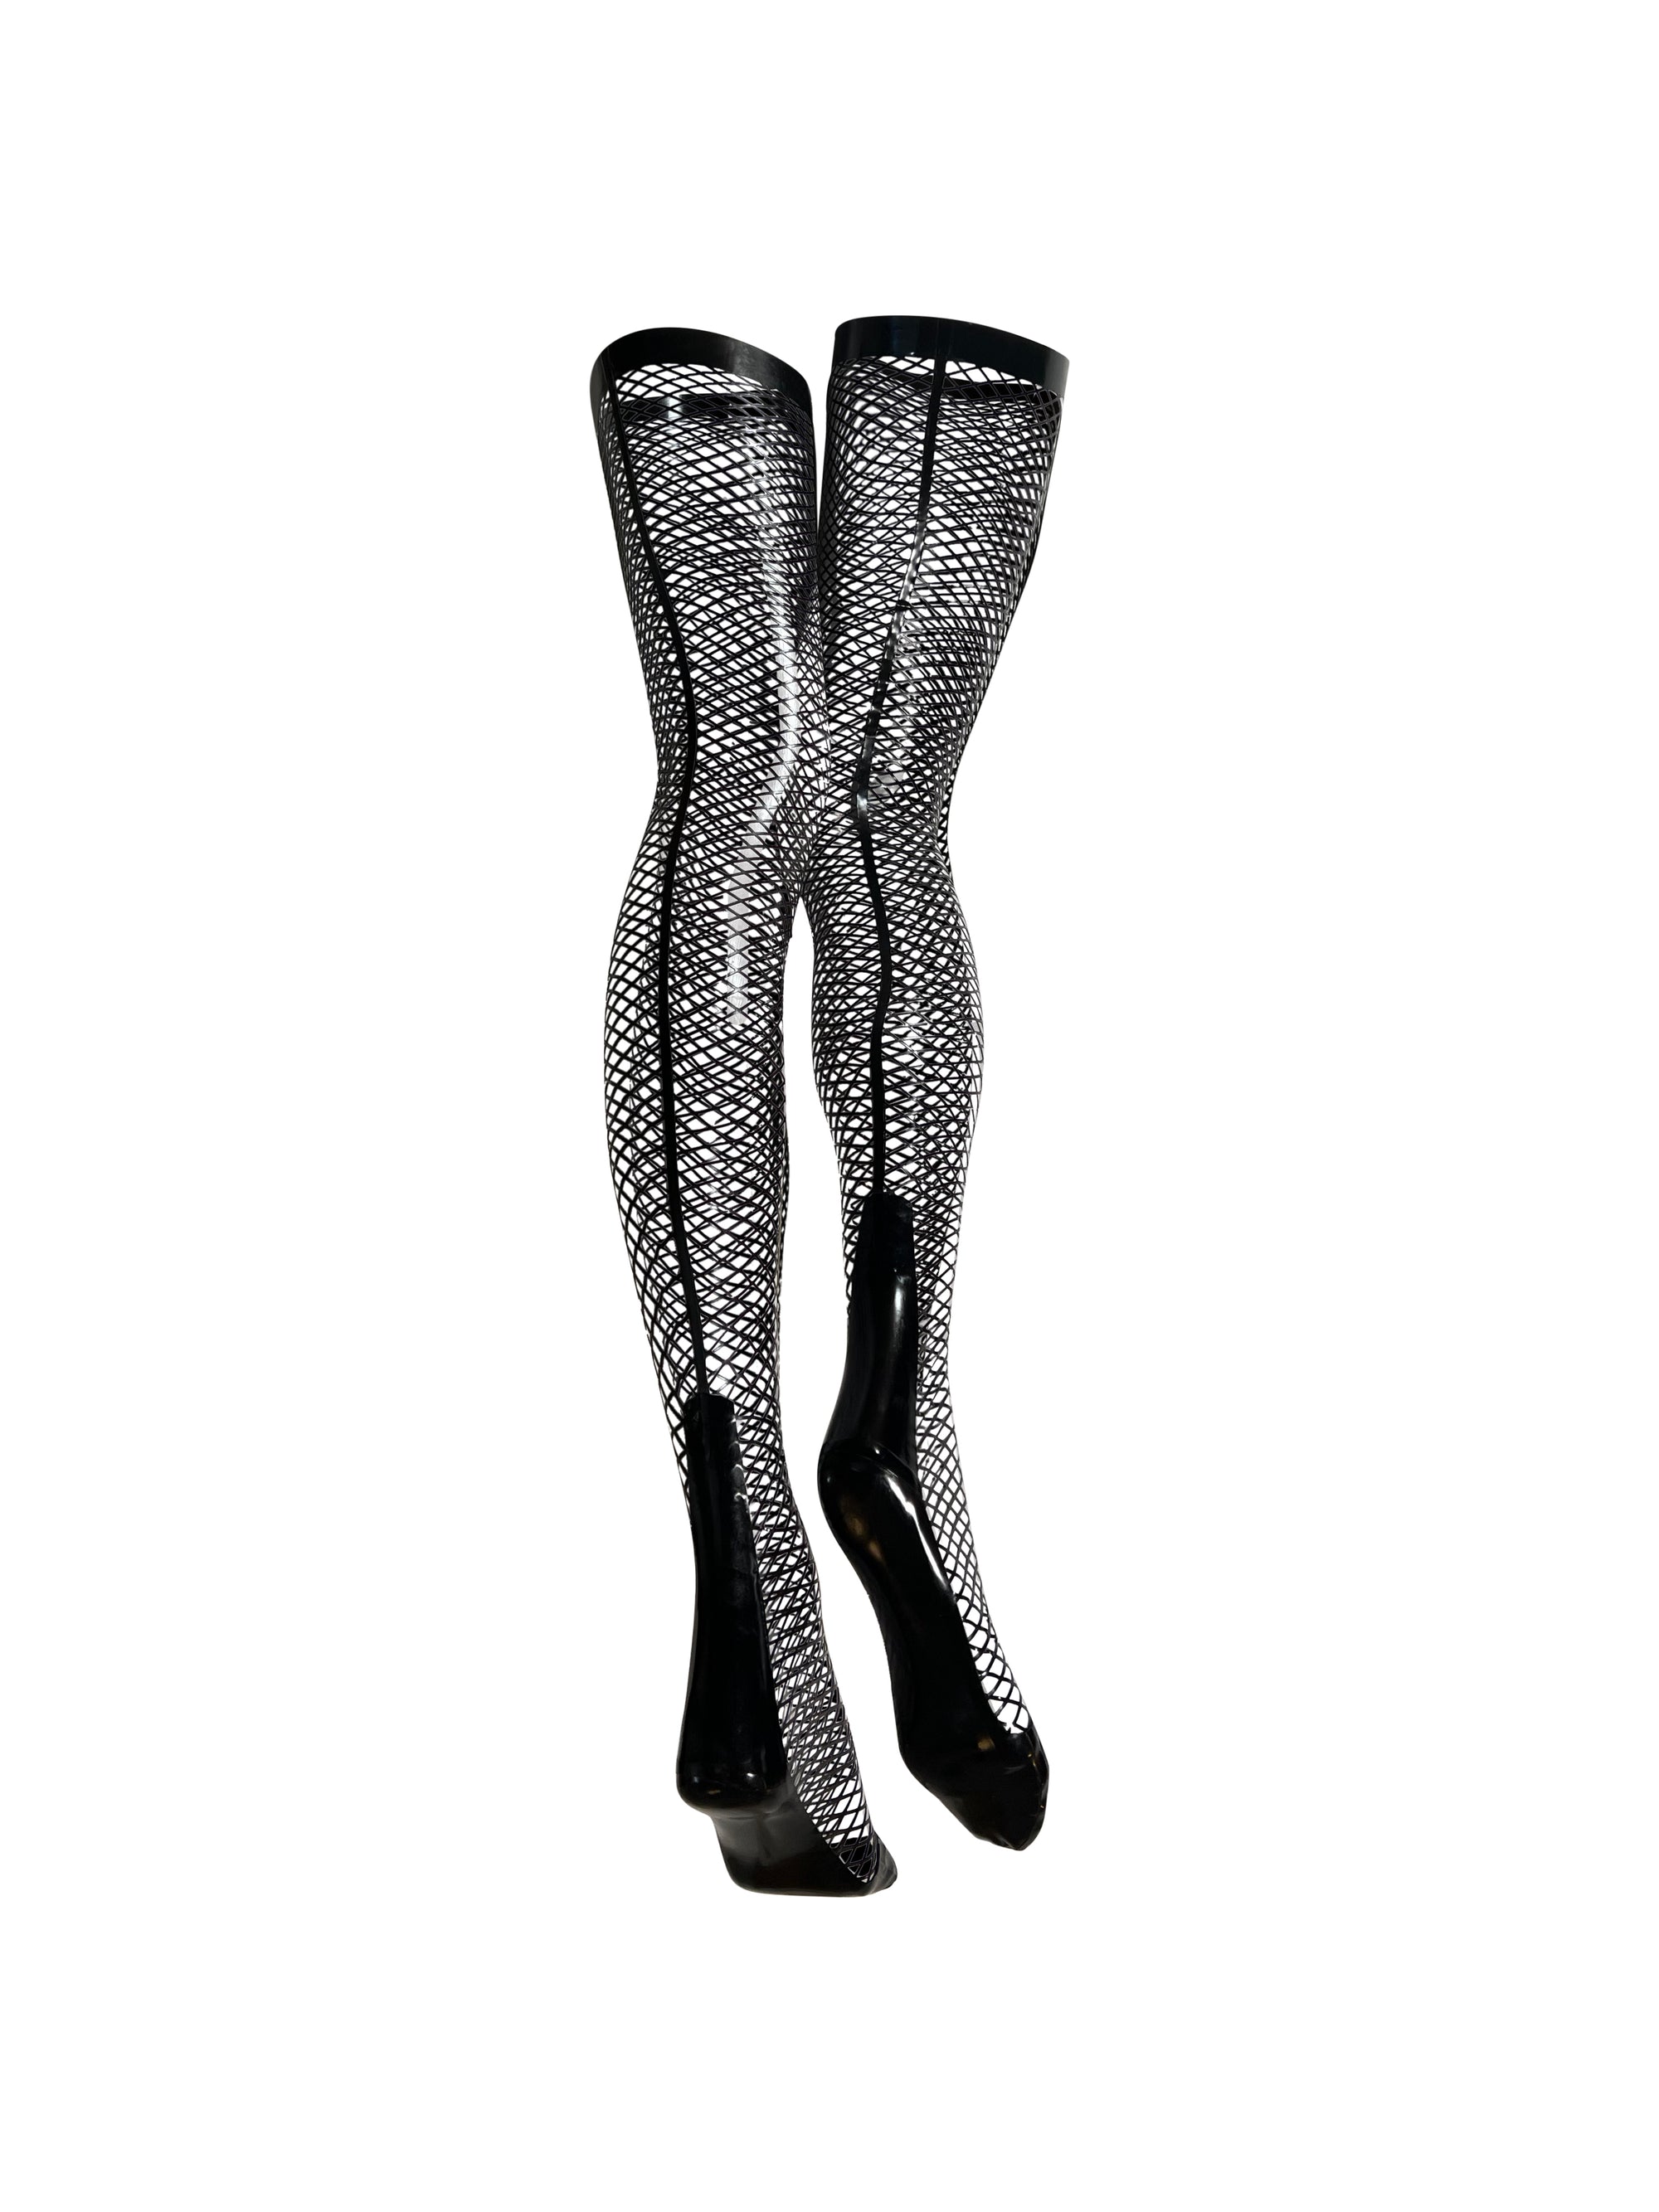 Fishnet Stockings  Apparel & Accessories - Vex Inc. | Latex Clothing